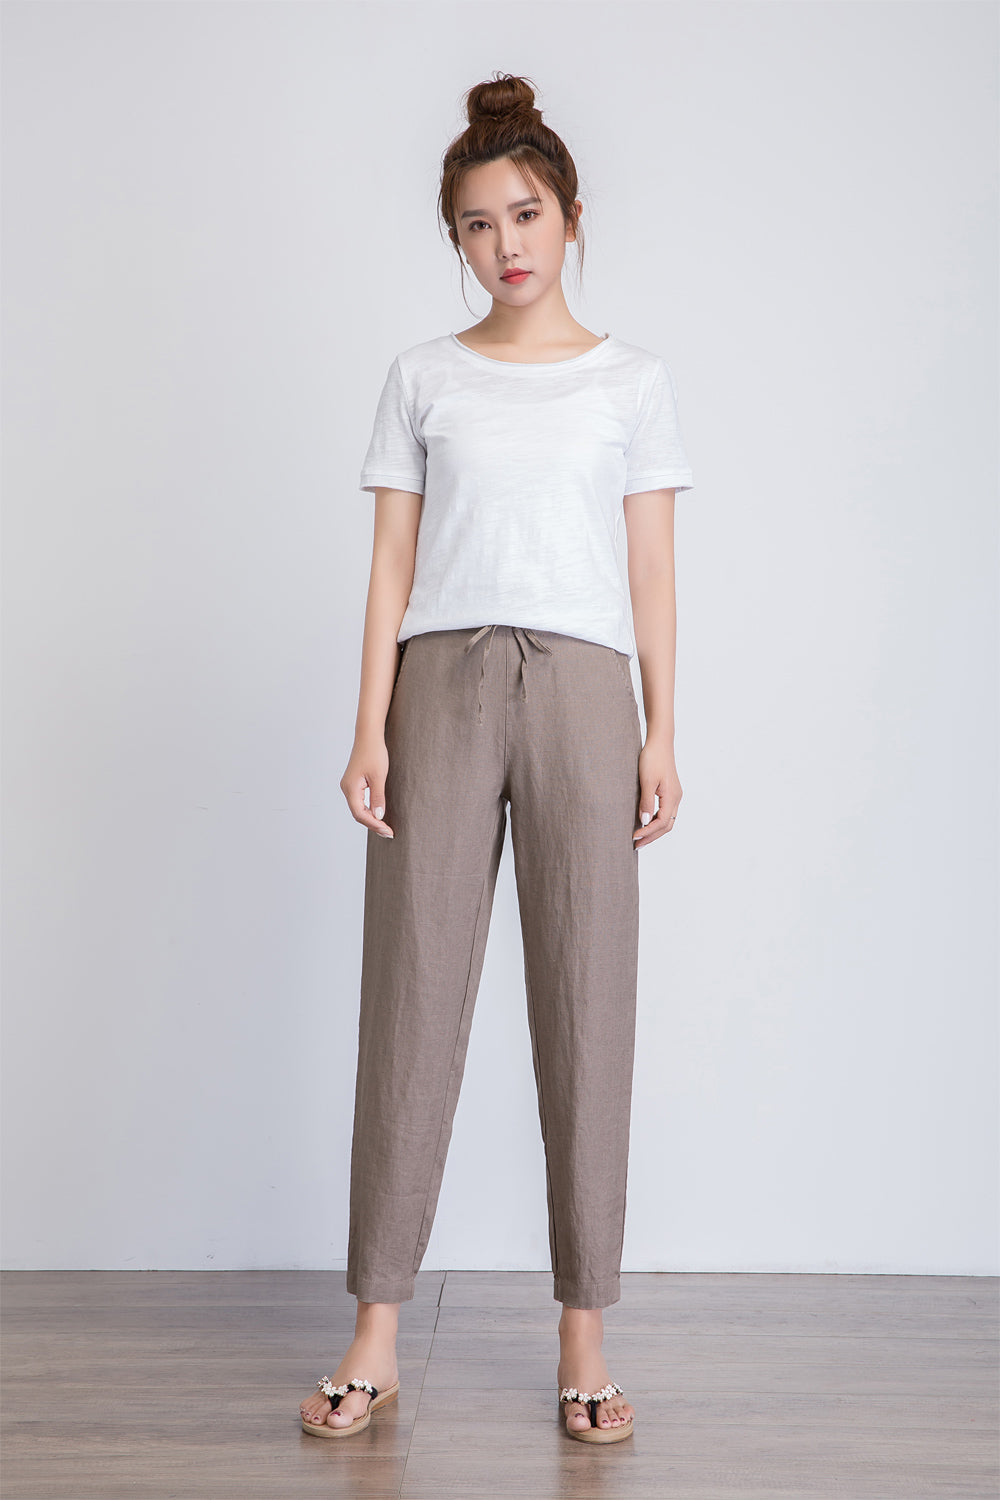 Buy Linen Palazzo Pants, High Waisted Pants, Linen Trousers Women